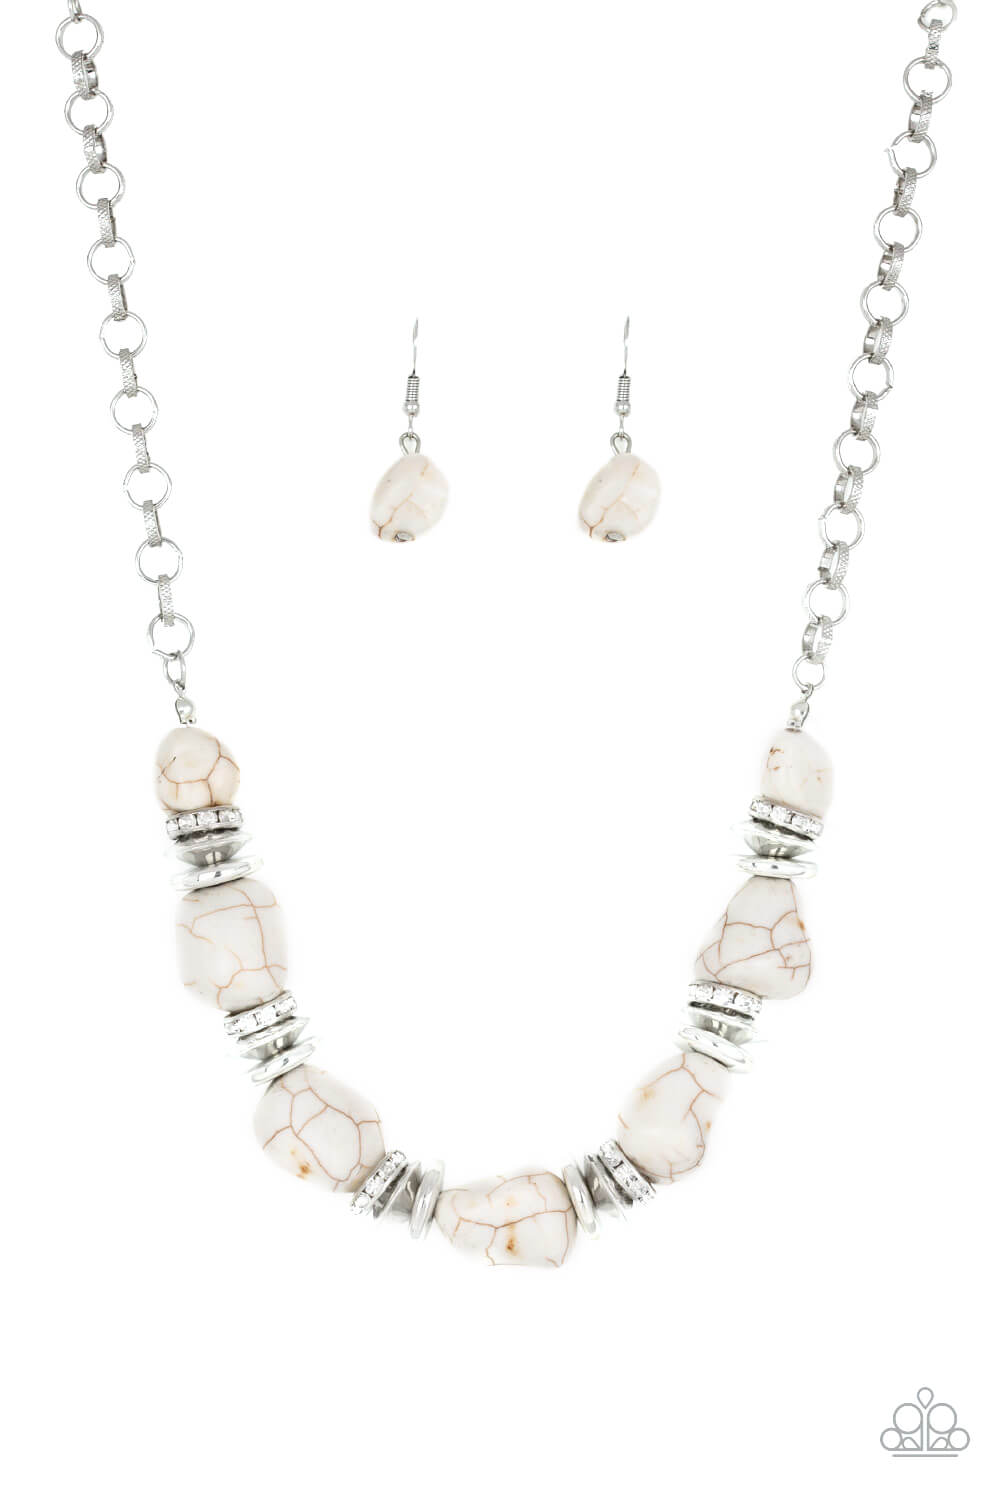 Stunningly Stone Age - White Necklace Set - Princess Glam Shop